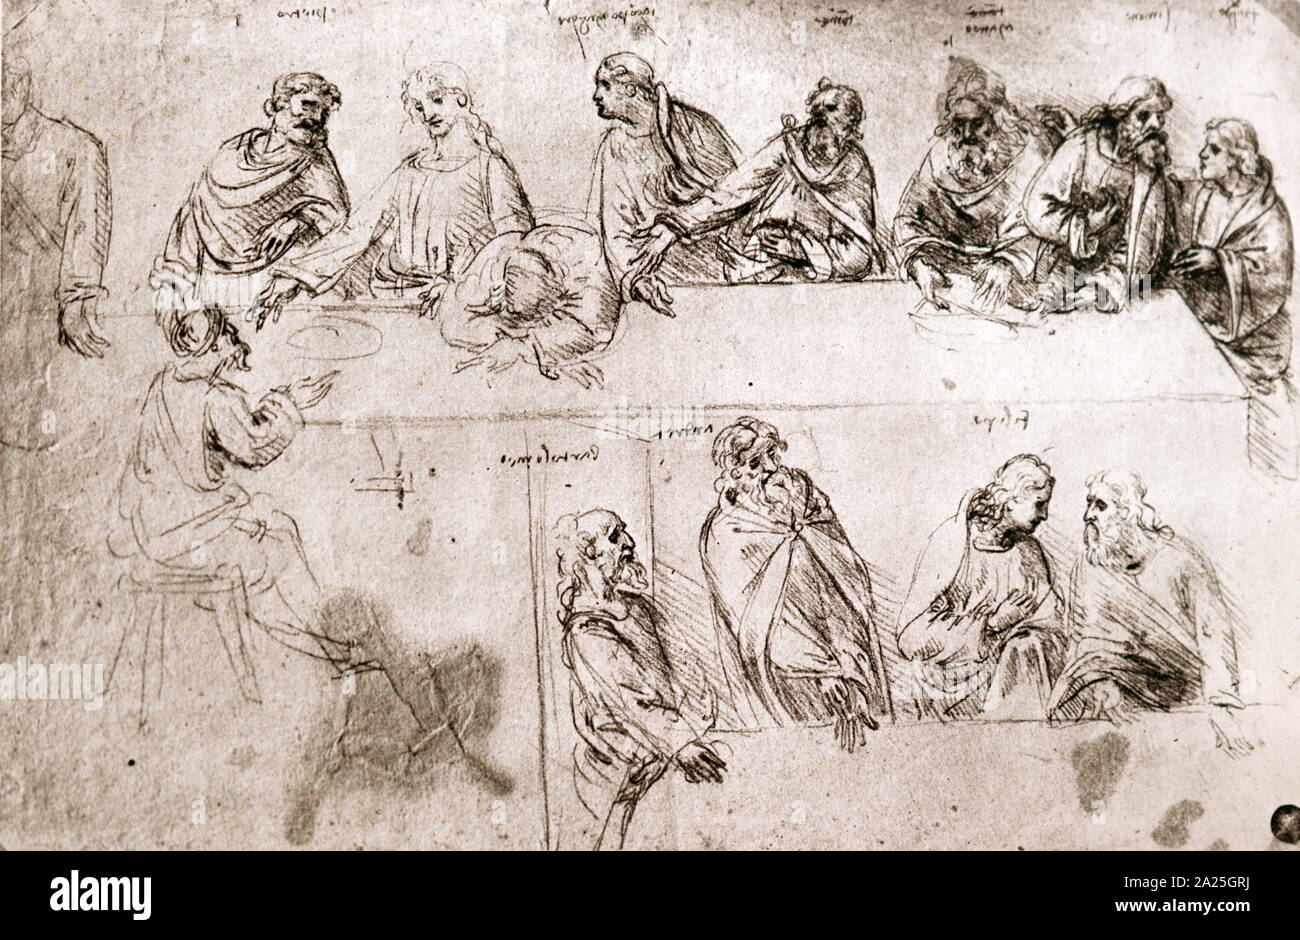 Study of the Last Supper by Leonardo da Vinci. Leonardo di ser Piero da Vinci (1452-1519) an Italian polymath of the Renaissance. Stock Photo